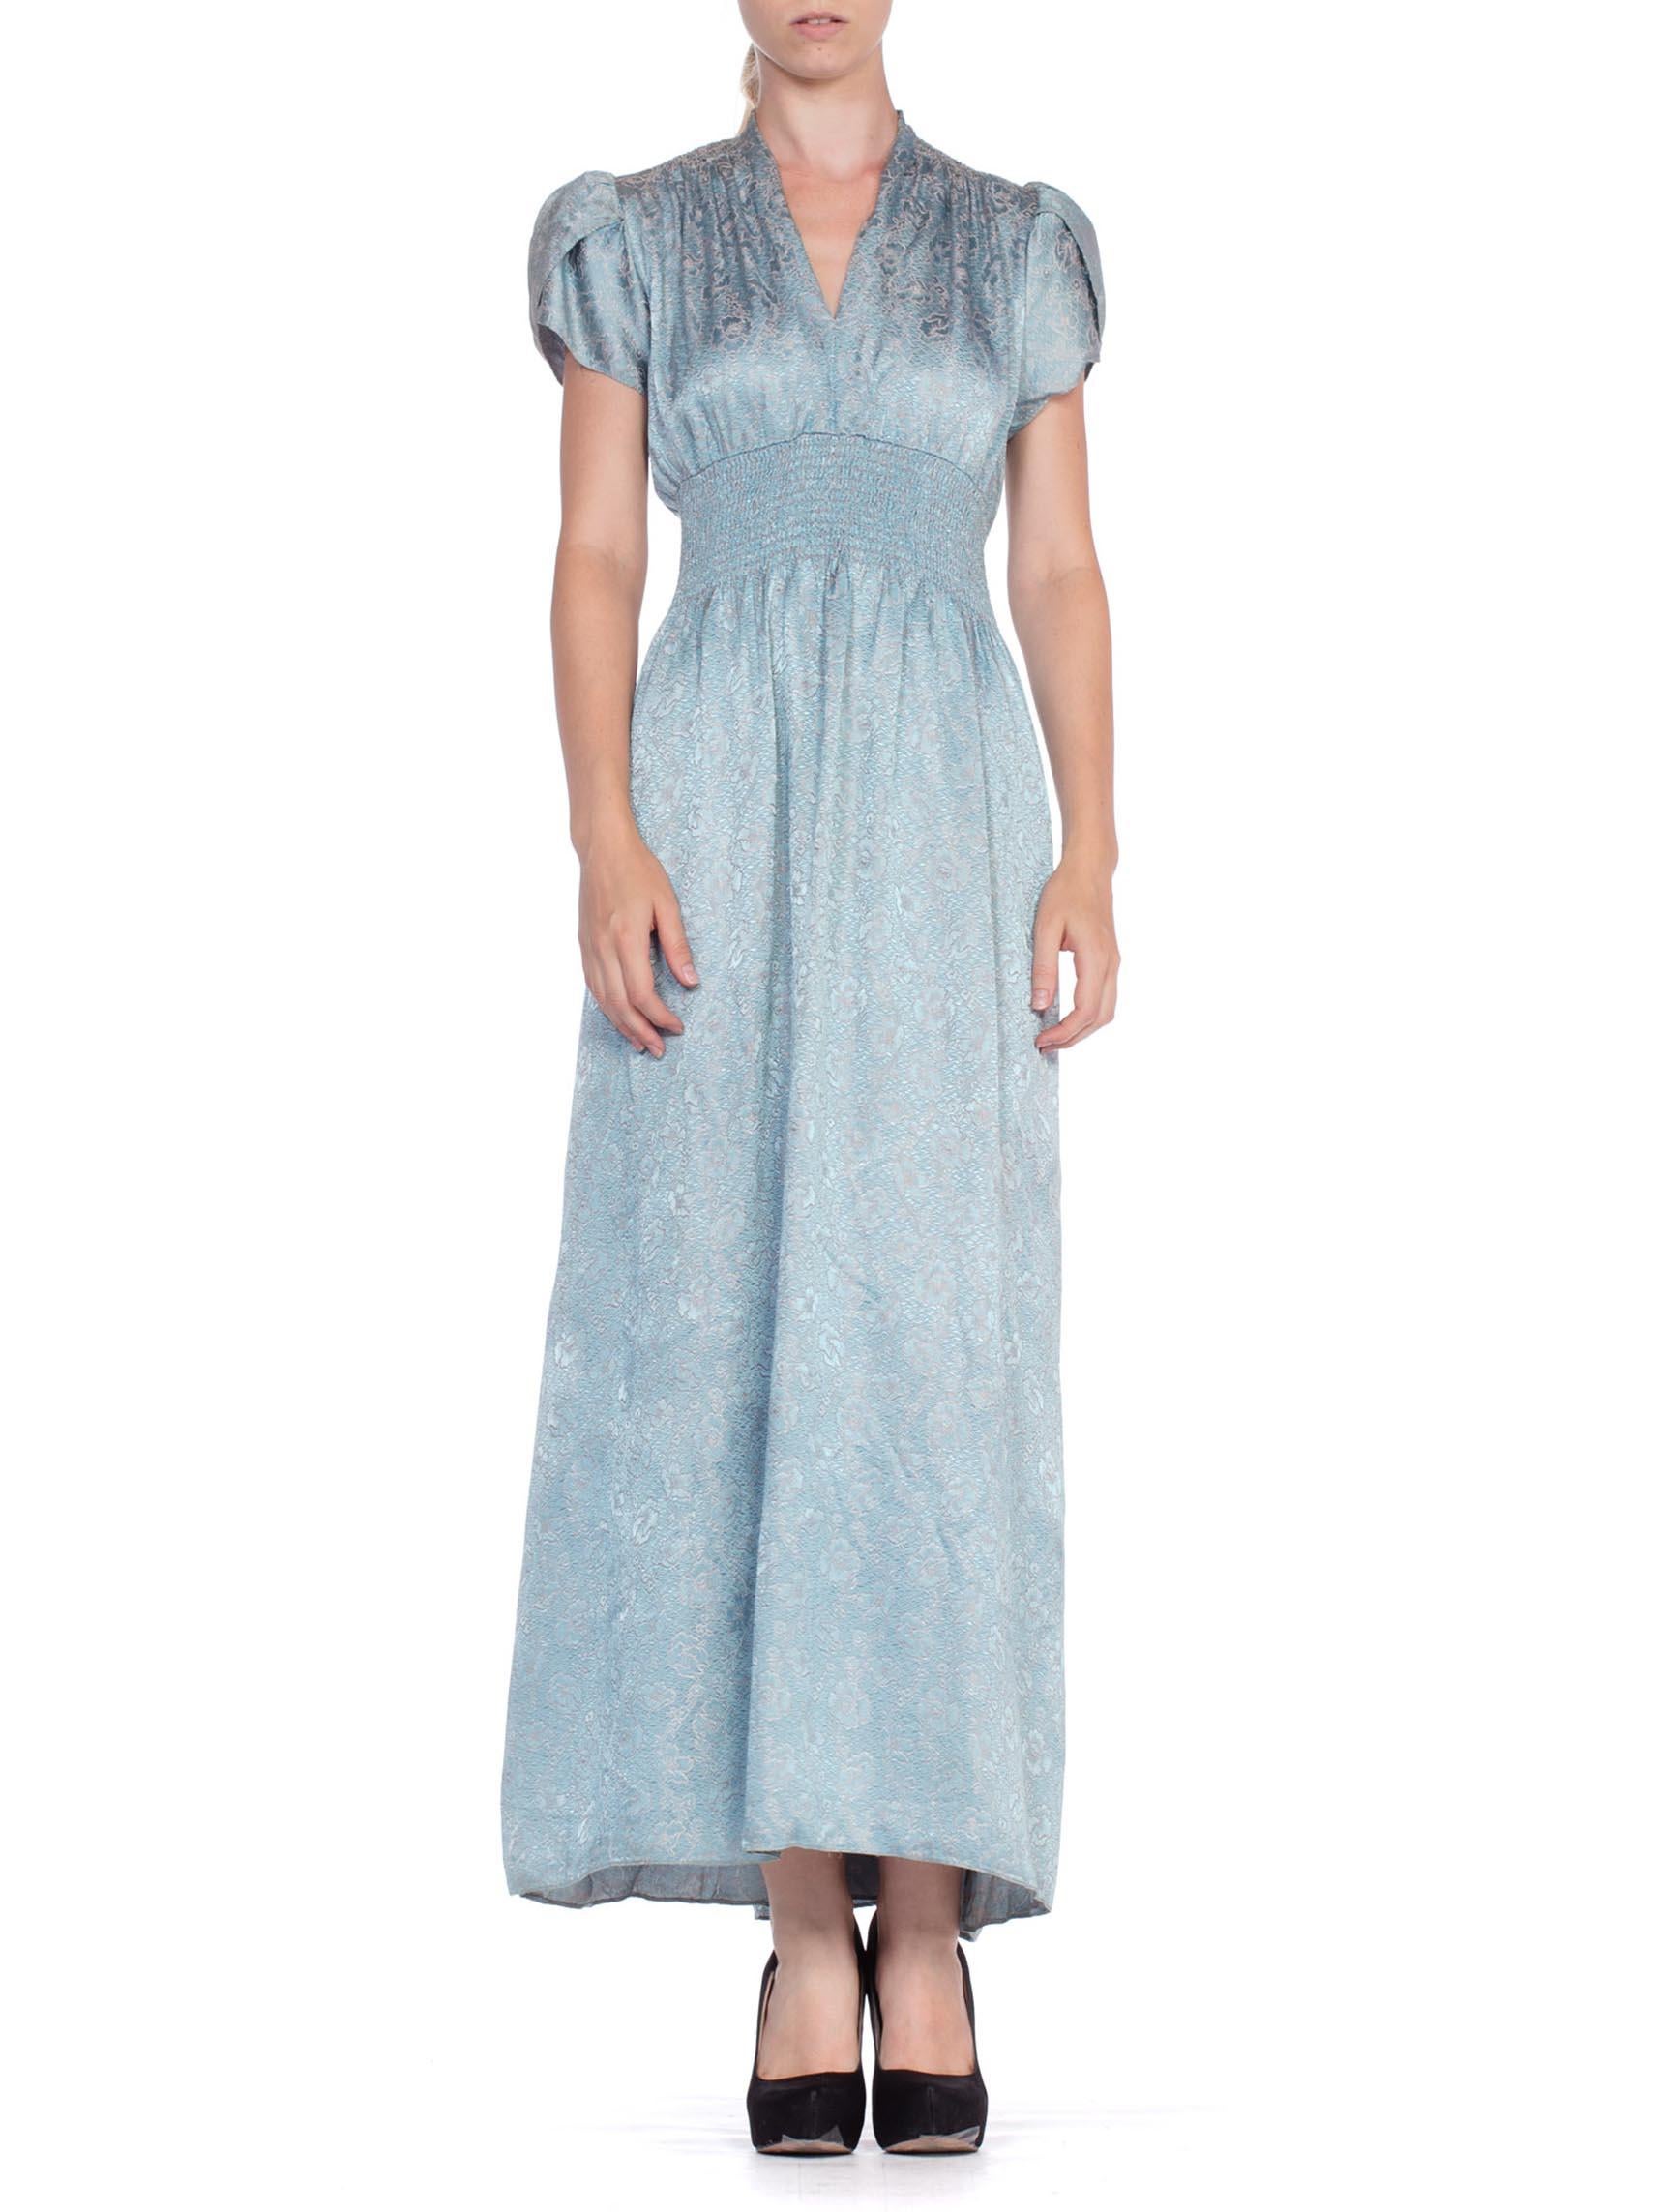 1940s blue dress